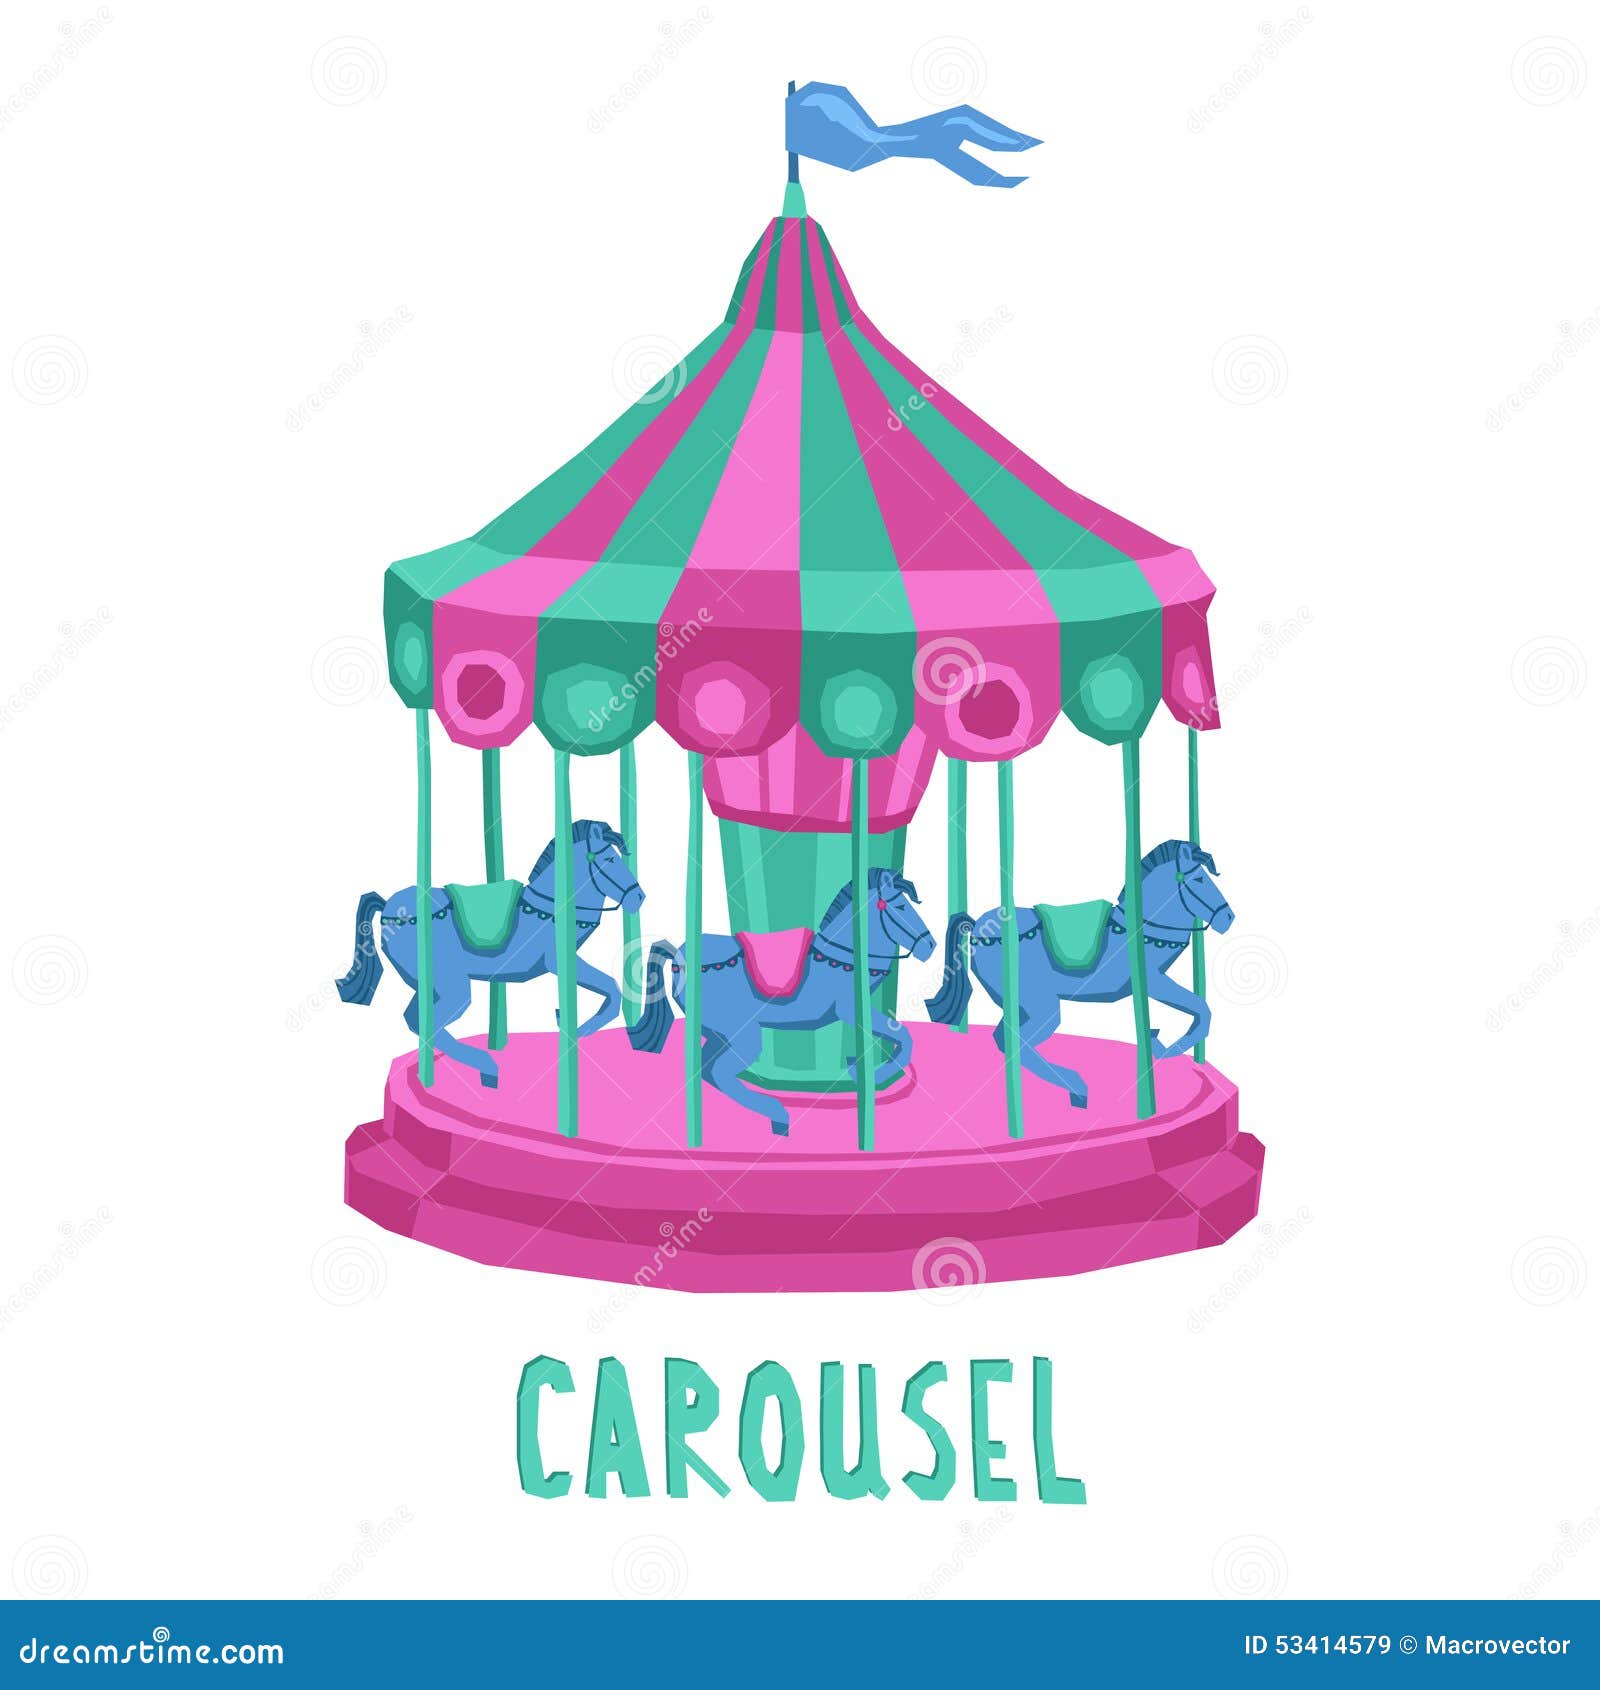 clipart carousel - photo #49